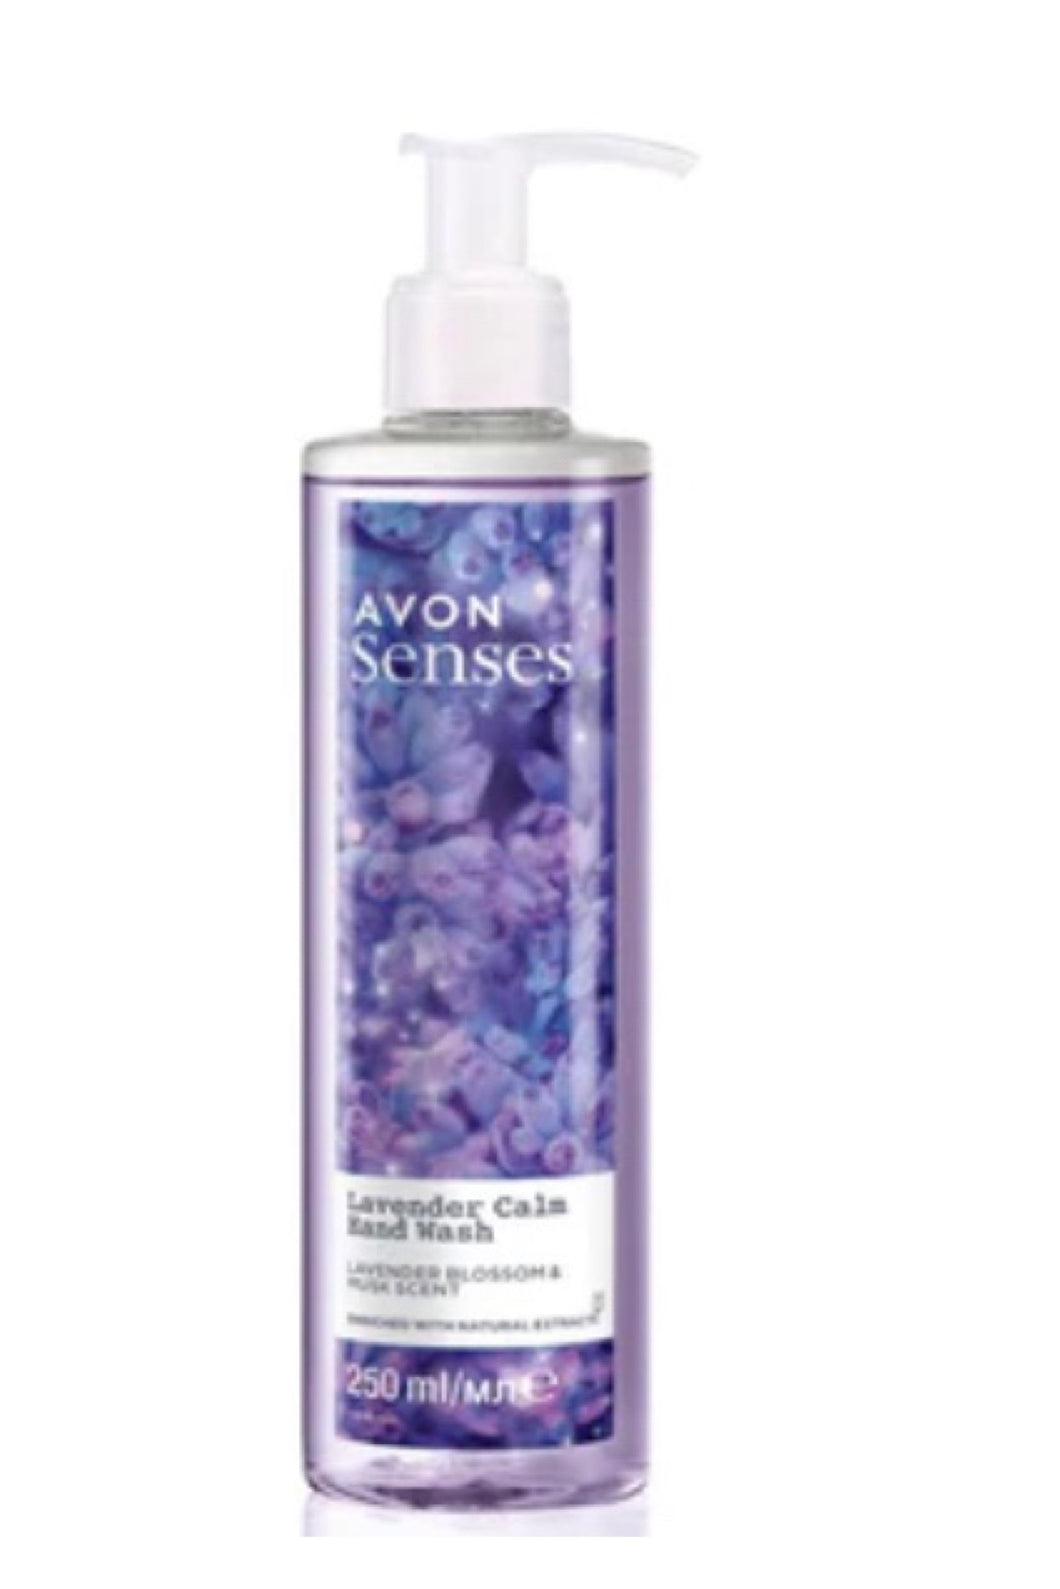 Senses Lavender Calm  Hand Wash - 250ml Lavender Blossom & Musk Scent